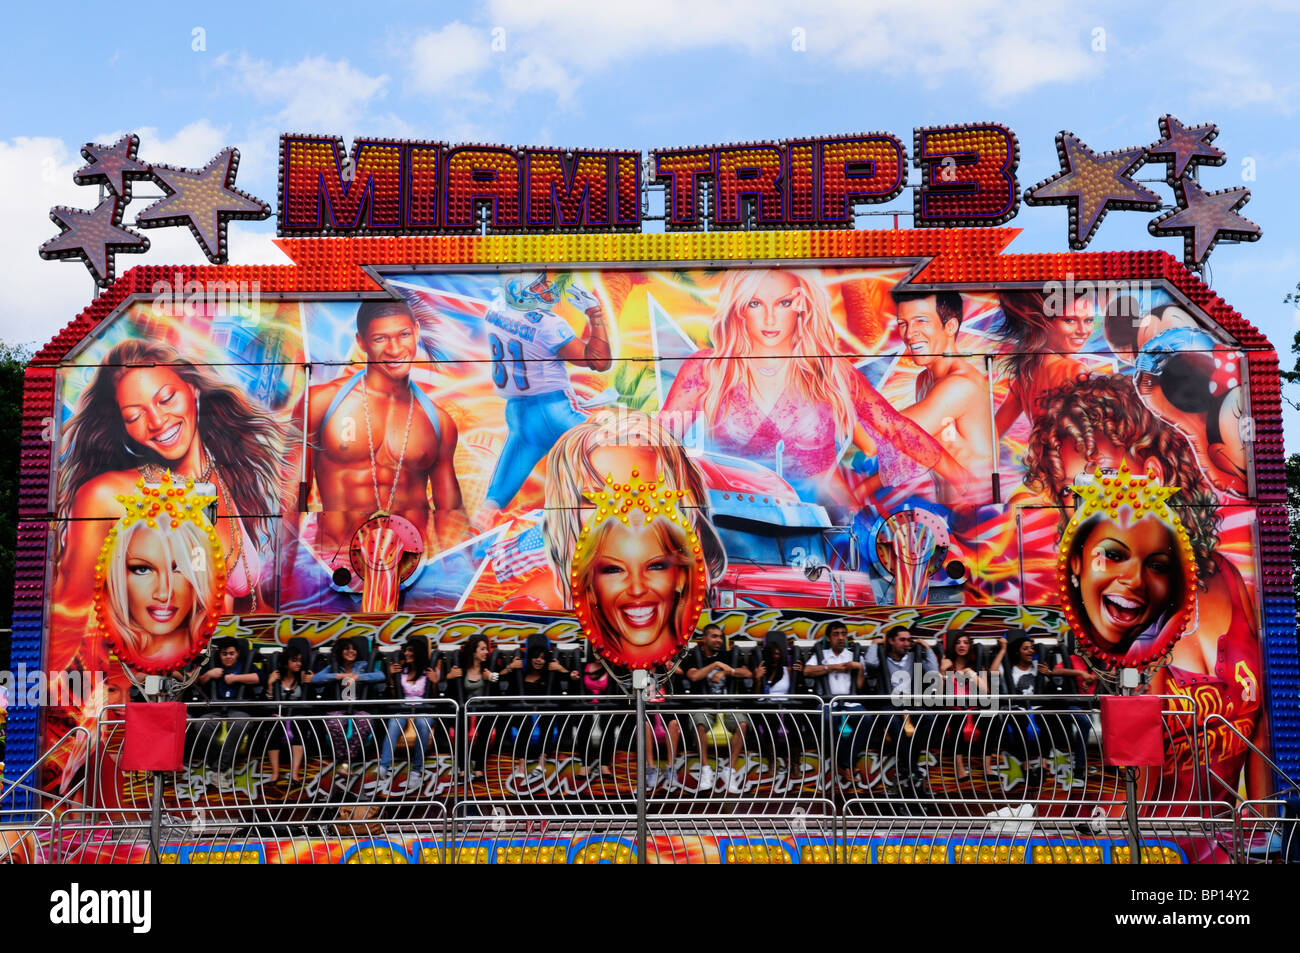 miami-trip-3-fairground-ride-at-the-lond